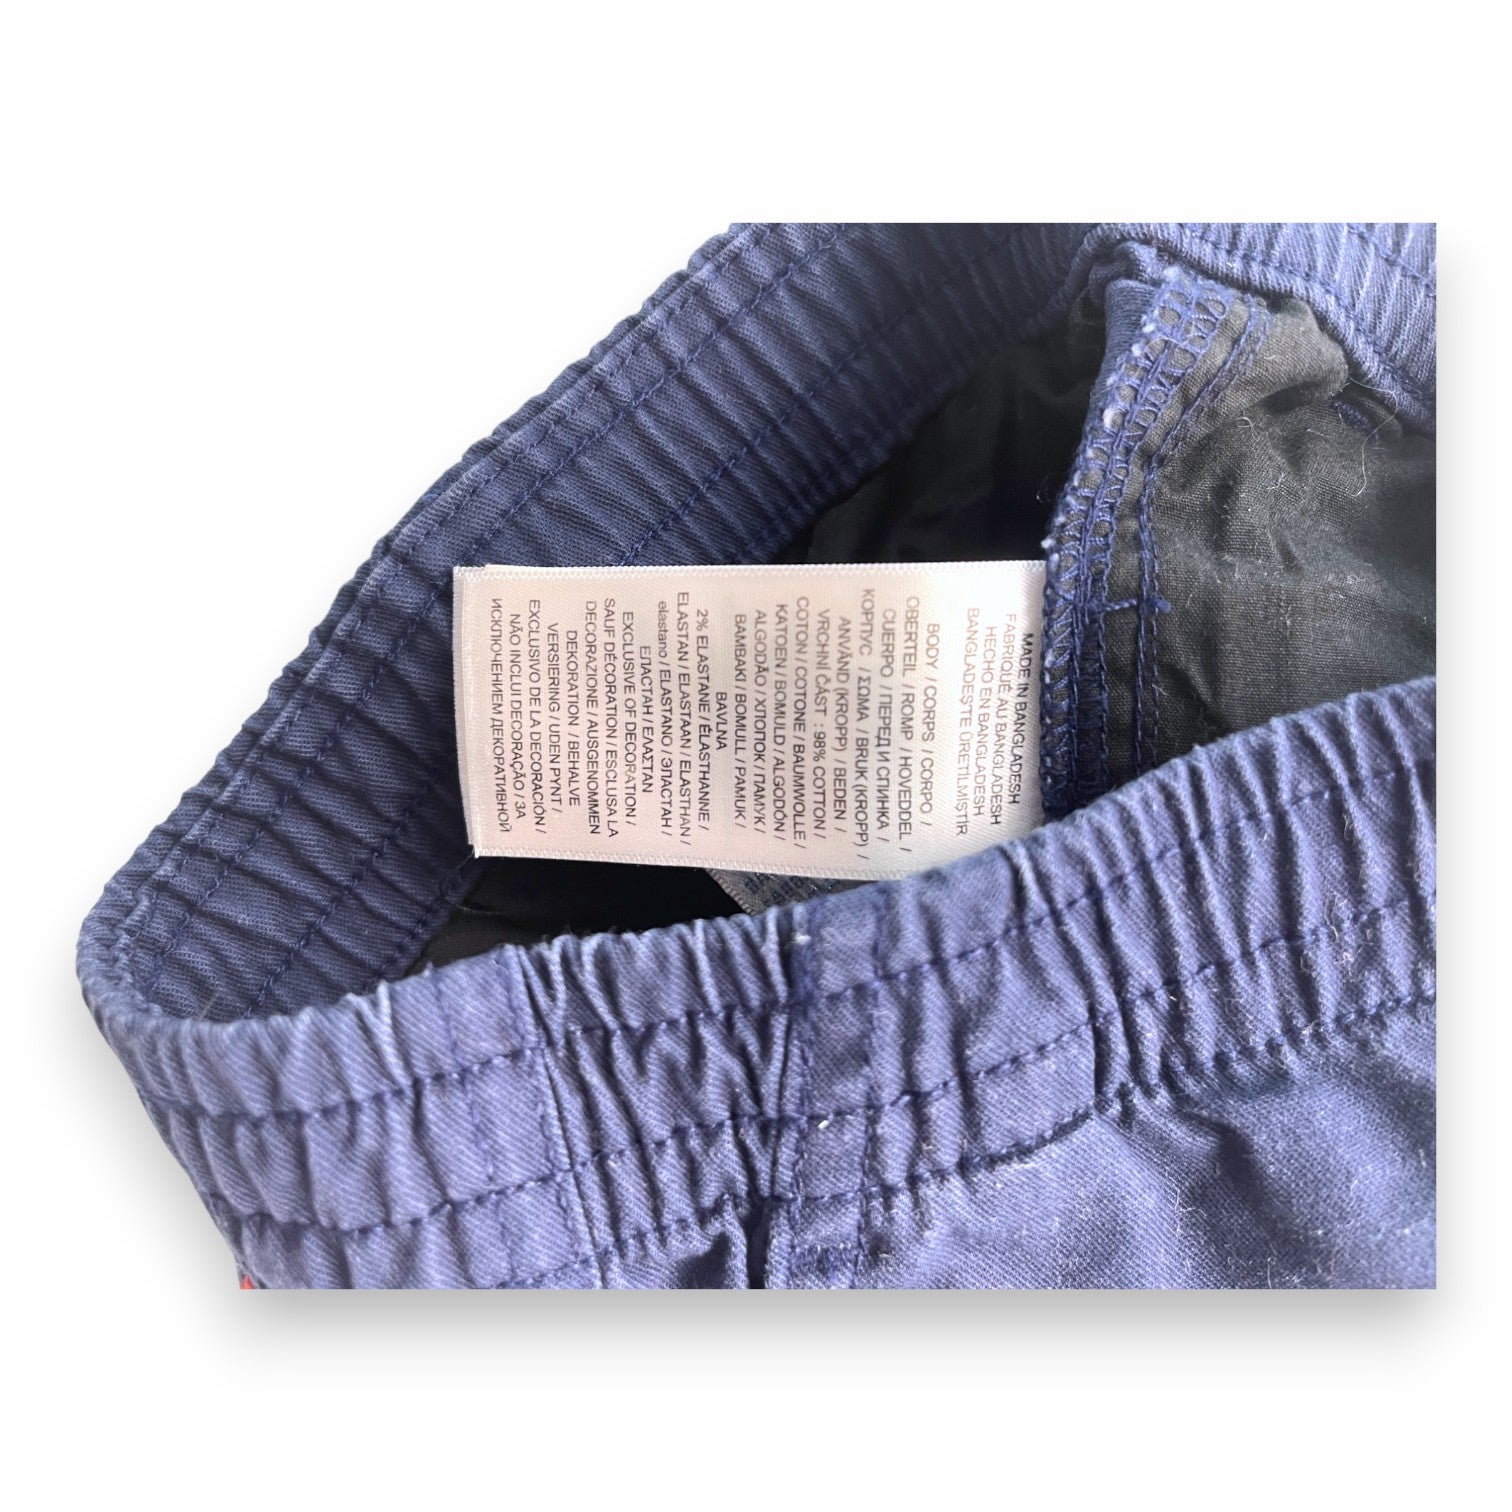 RALPH LAUREN - Pantalon bleu marine droit - 9 mois